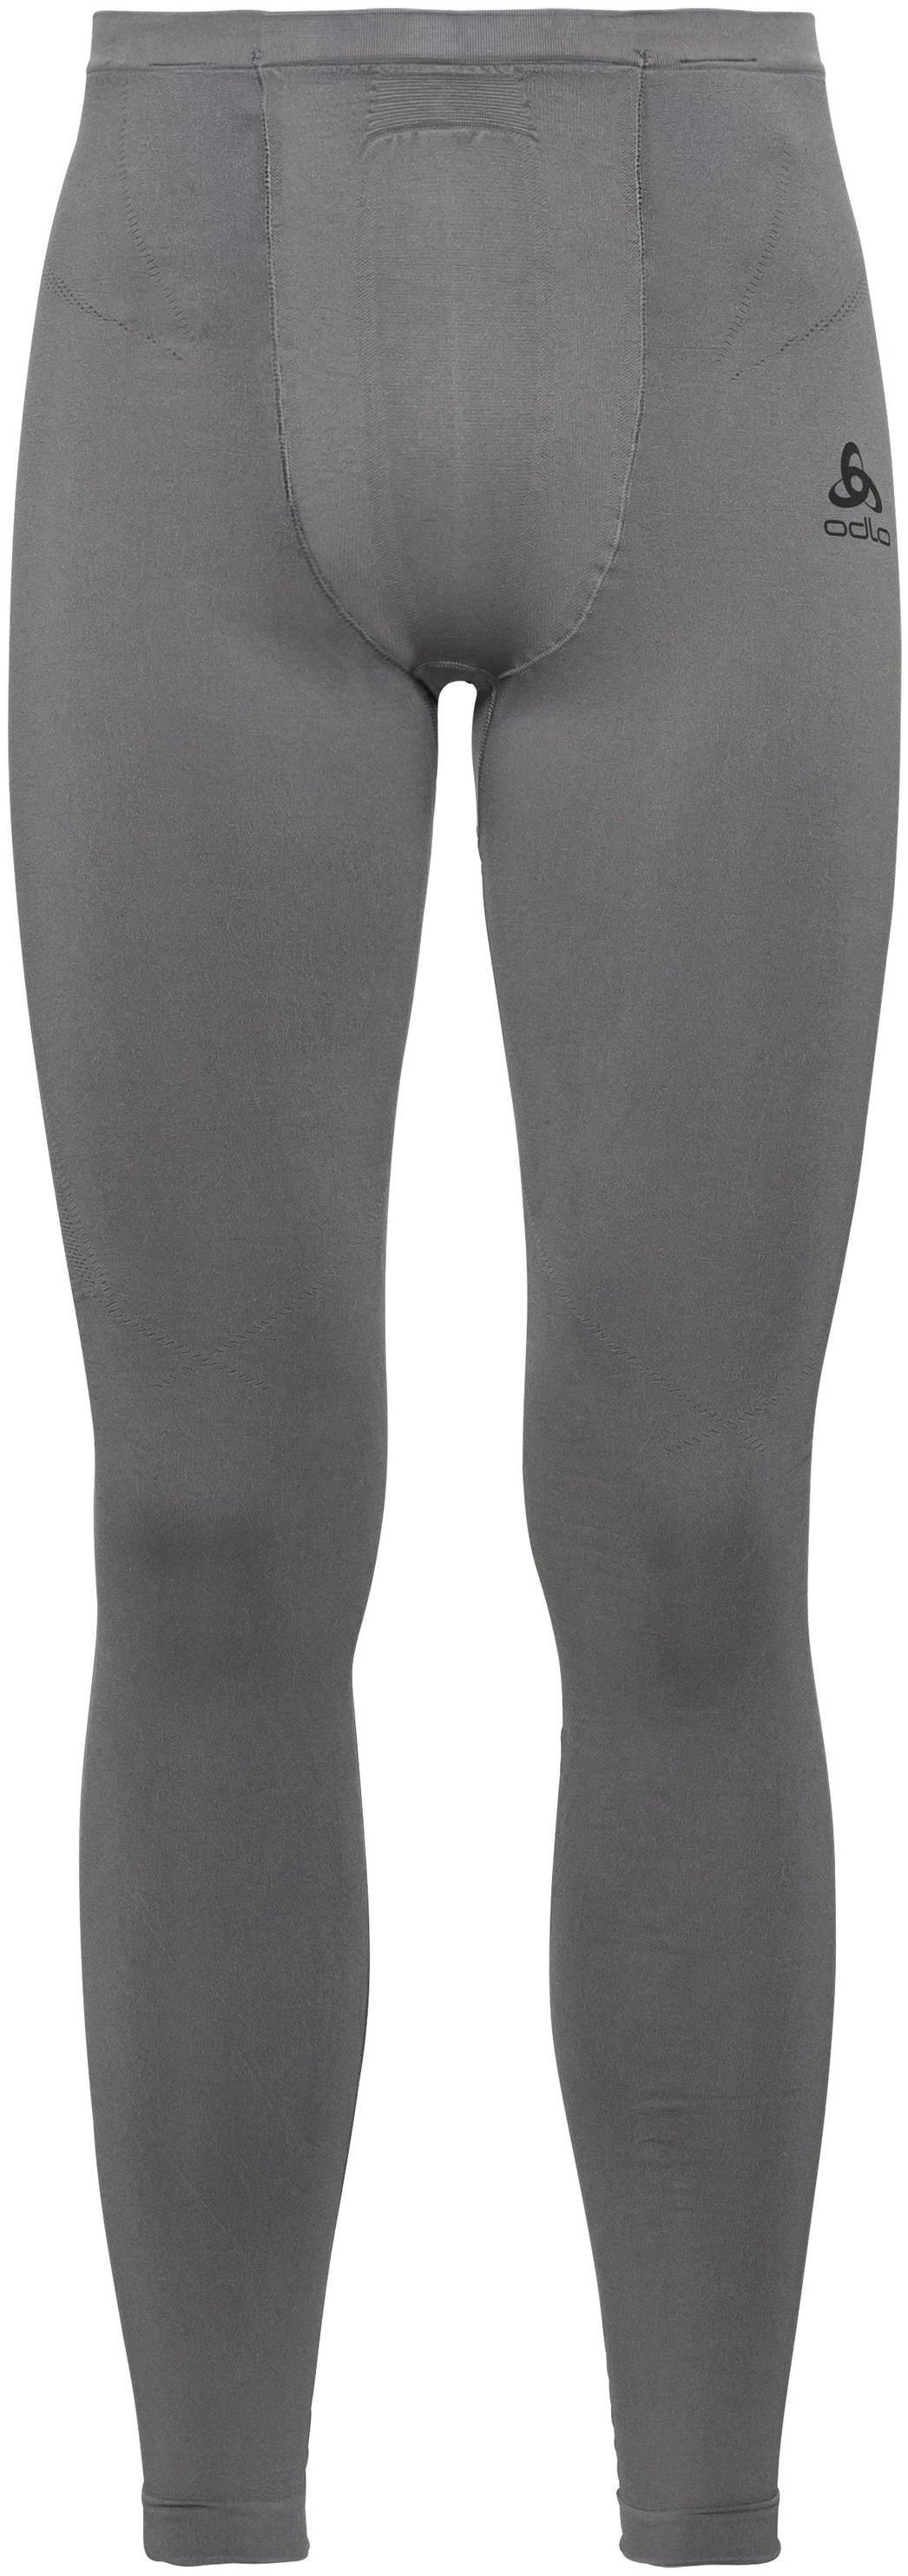 Image of Odlo Men's Performance Evolution Warm Baselayer Pants